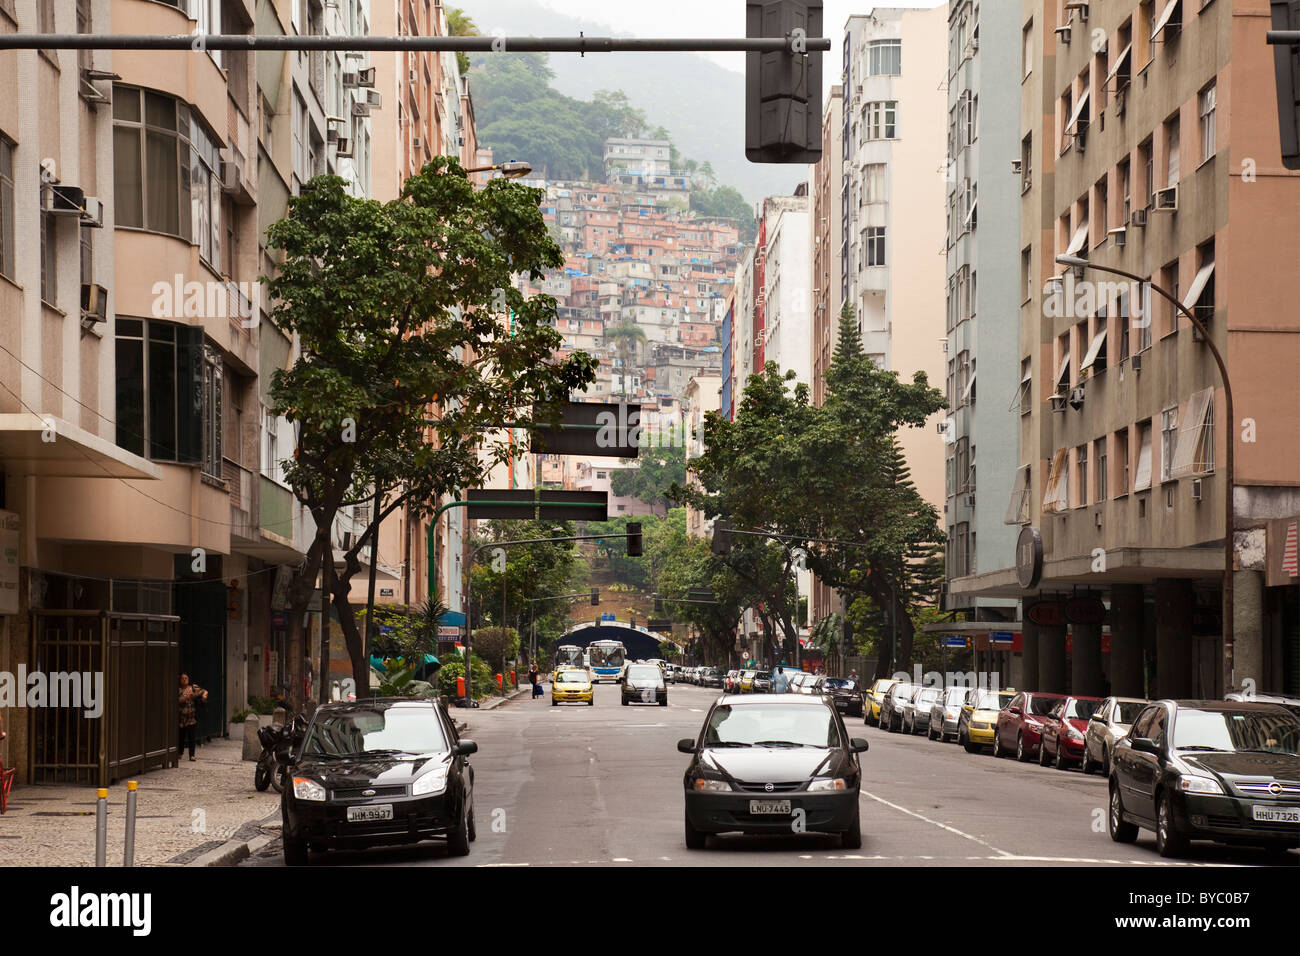 City view of Rio de Janeiro, showing Favelas or Shanty Town on hillside in background. Rio de Janeiro, Brazil, South America. Stock Photo